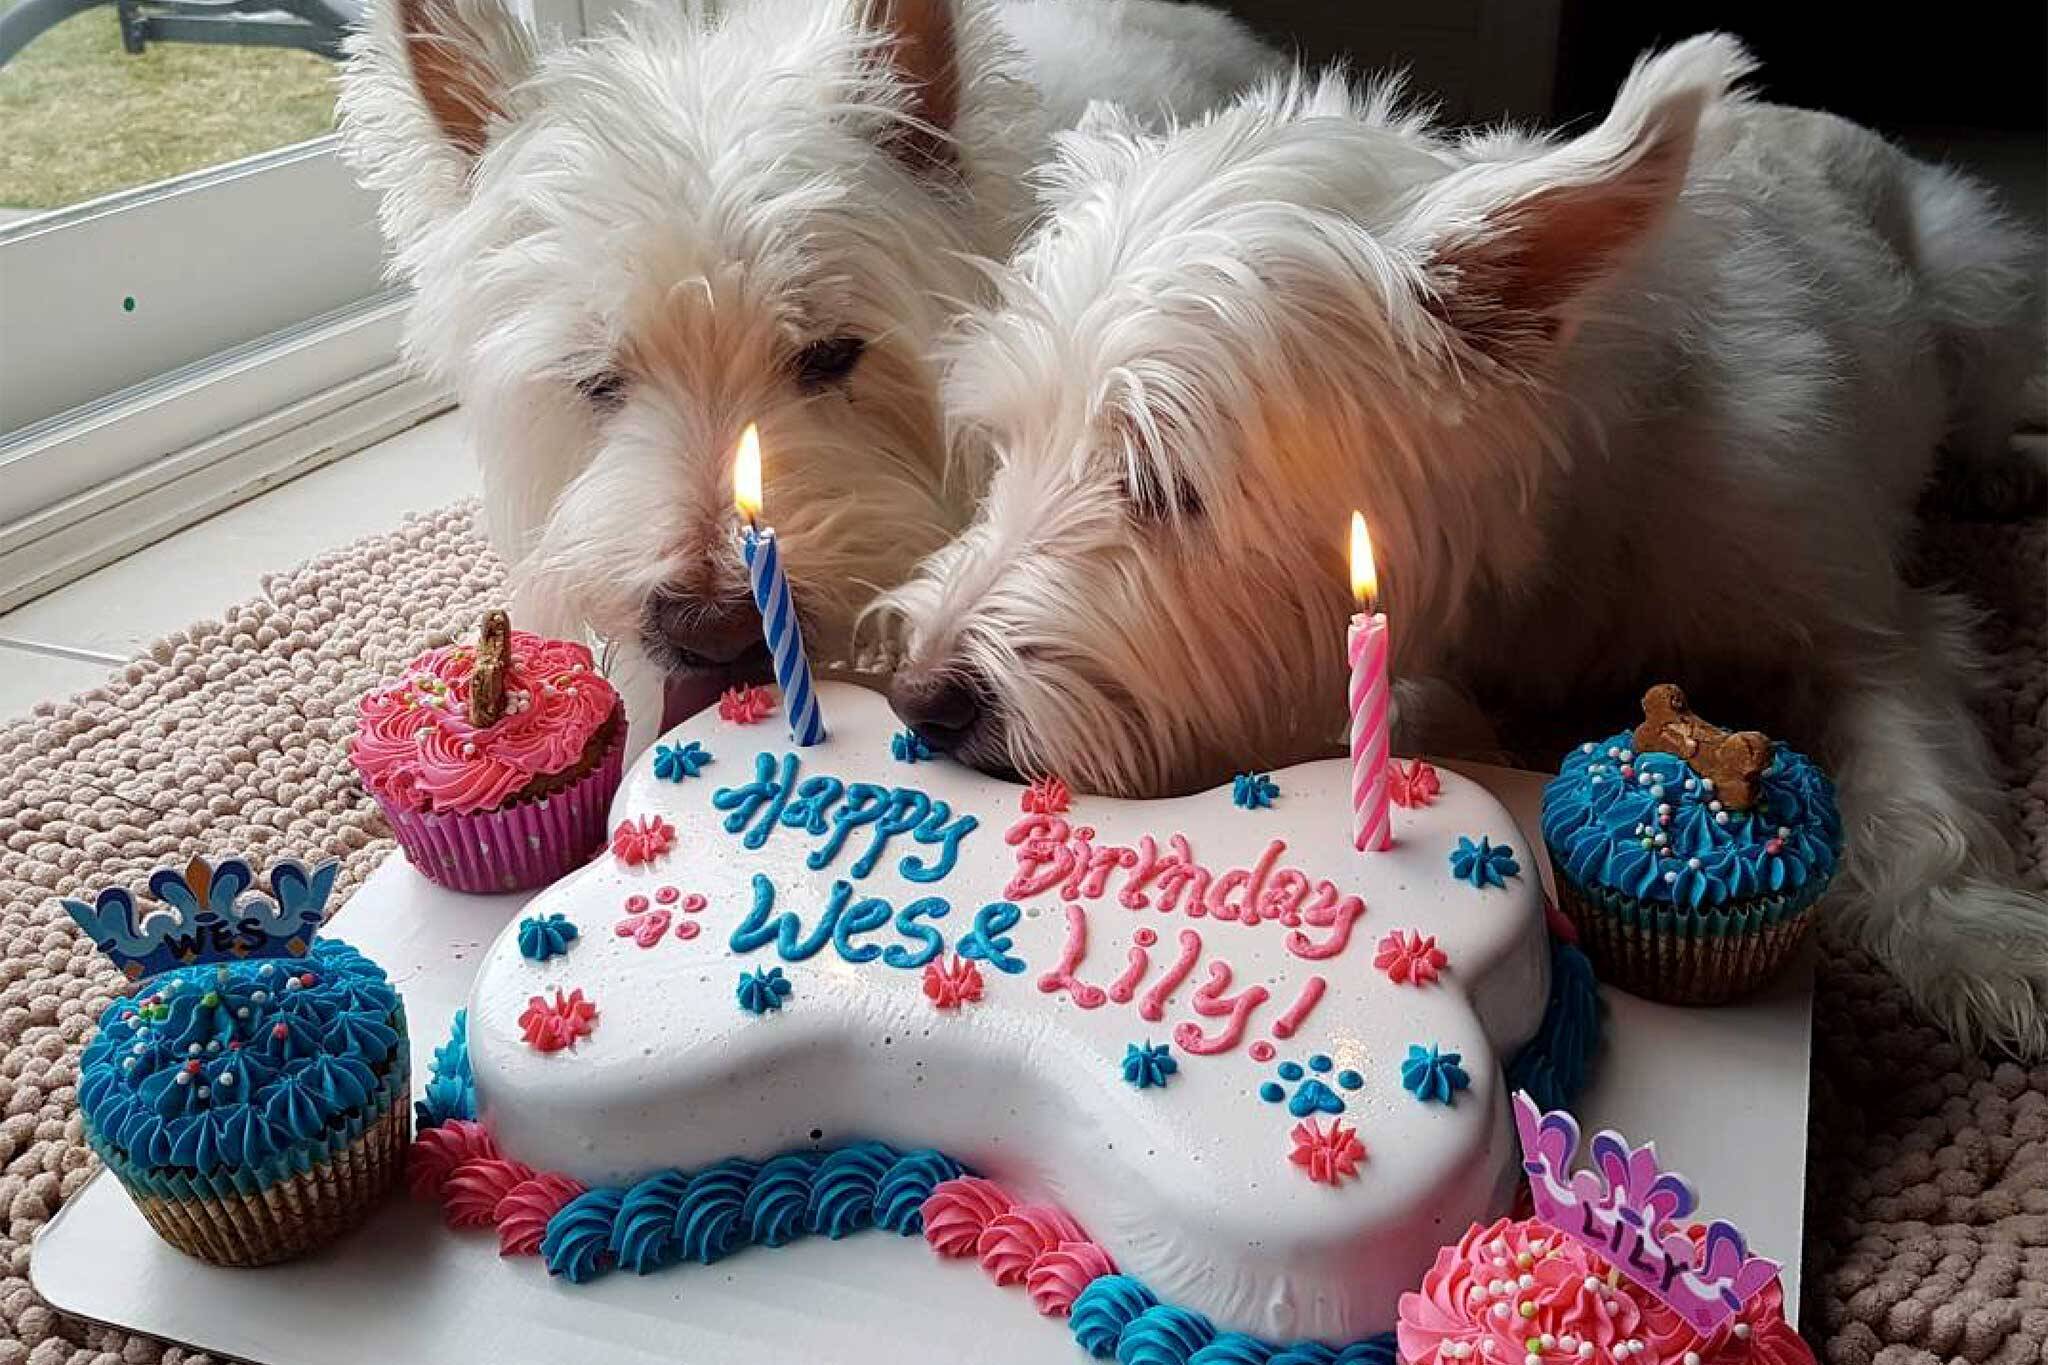 Toronto bakery will make your dog a birthday cake